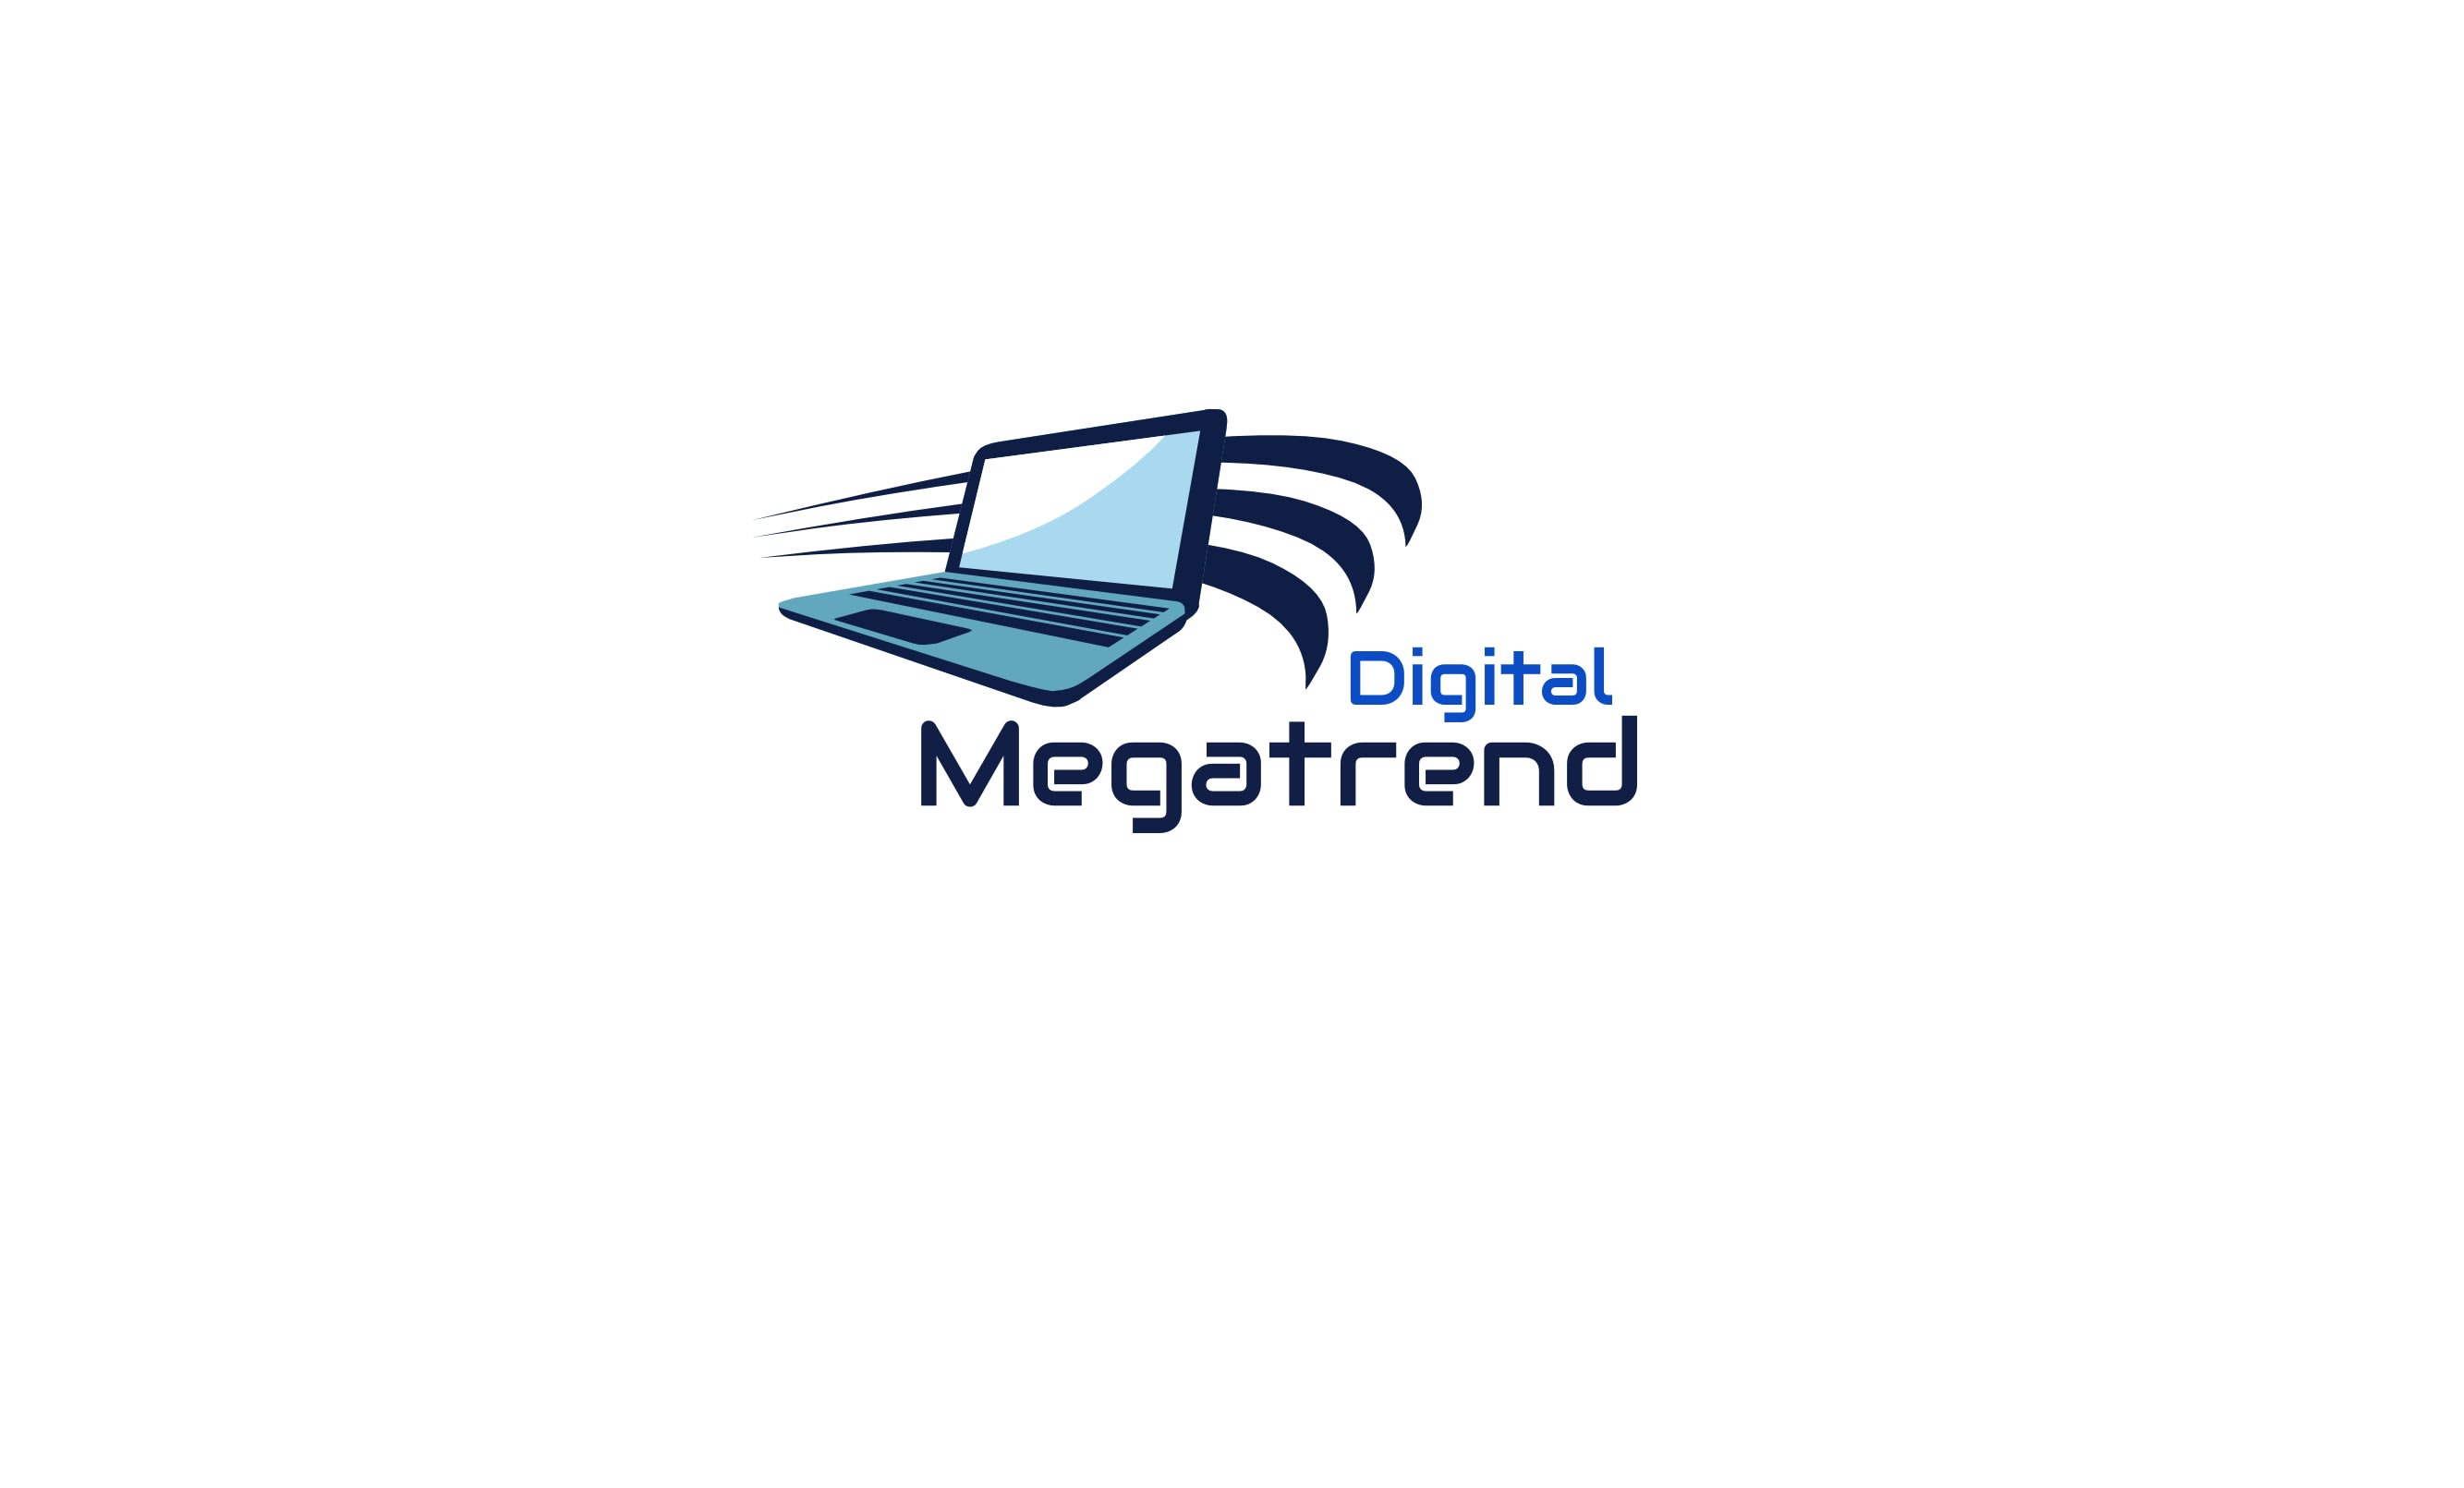 Megatrend Digital